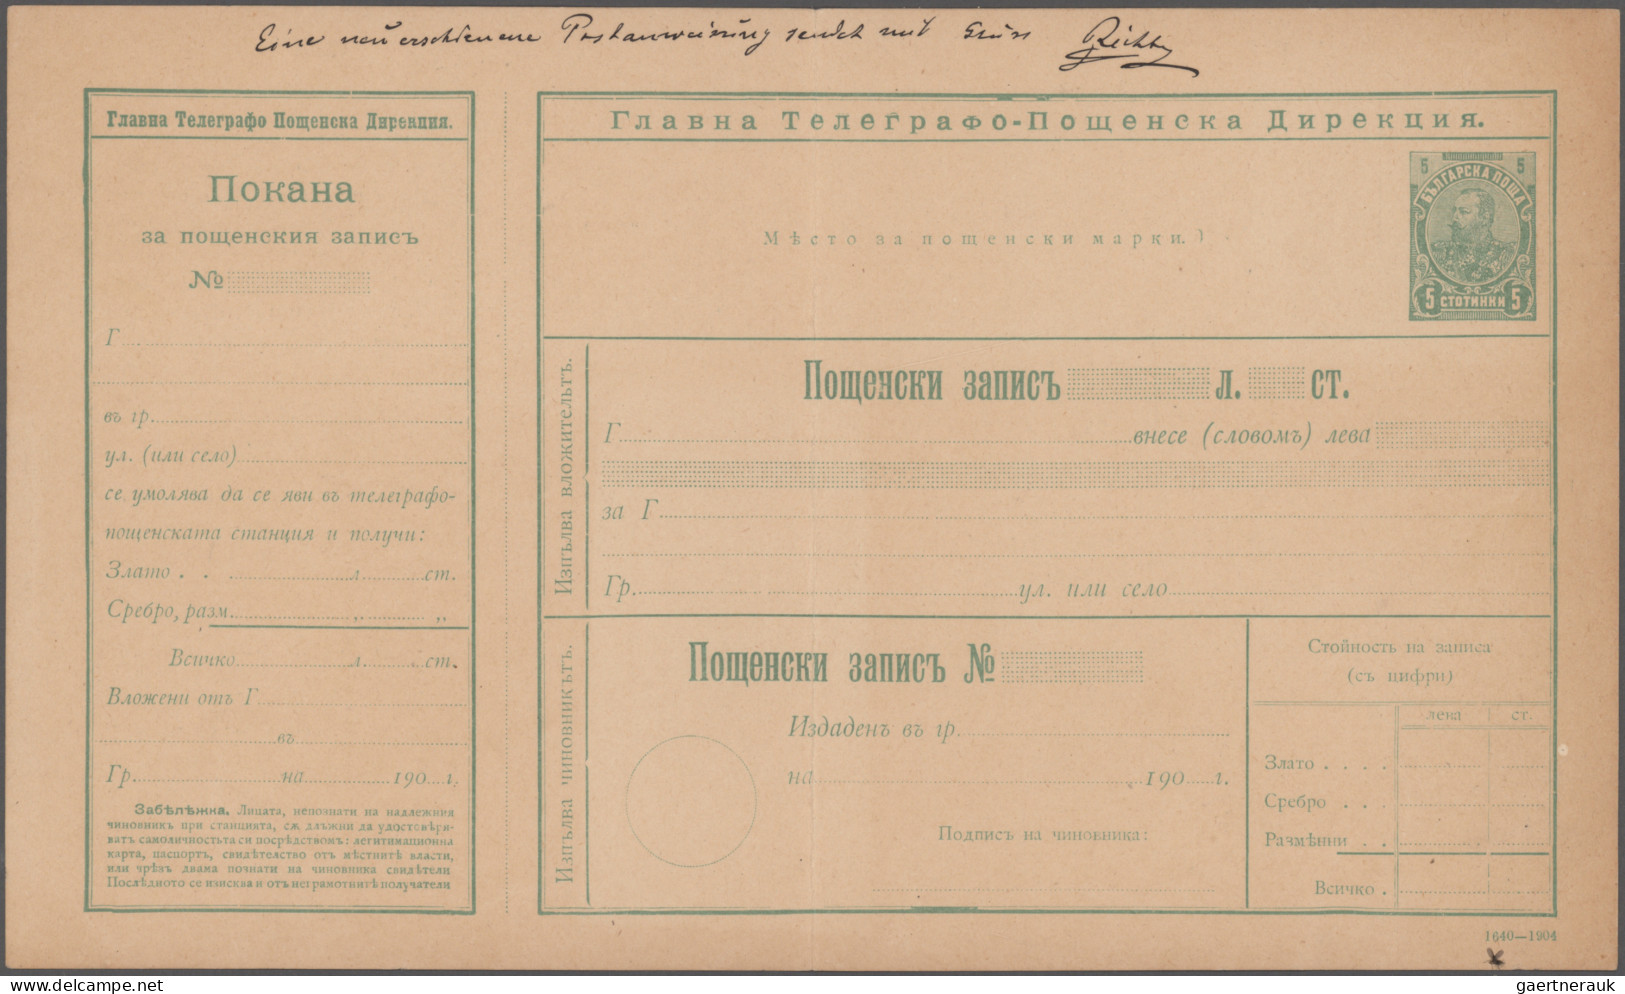 Bulgaria - postal stationery: 1890/1945, stationaries of czarist Bulgaria: from